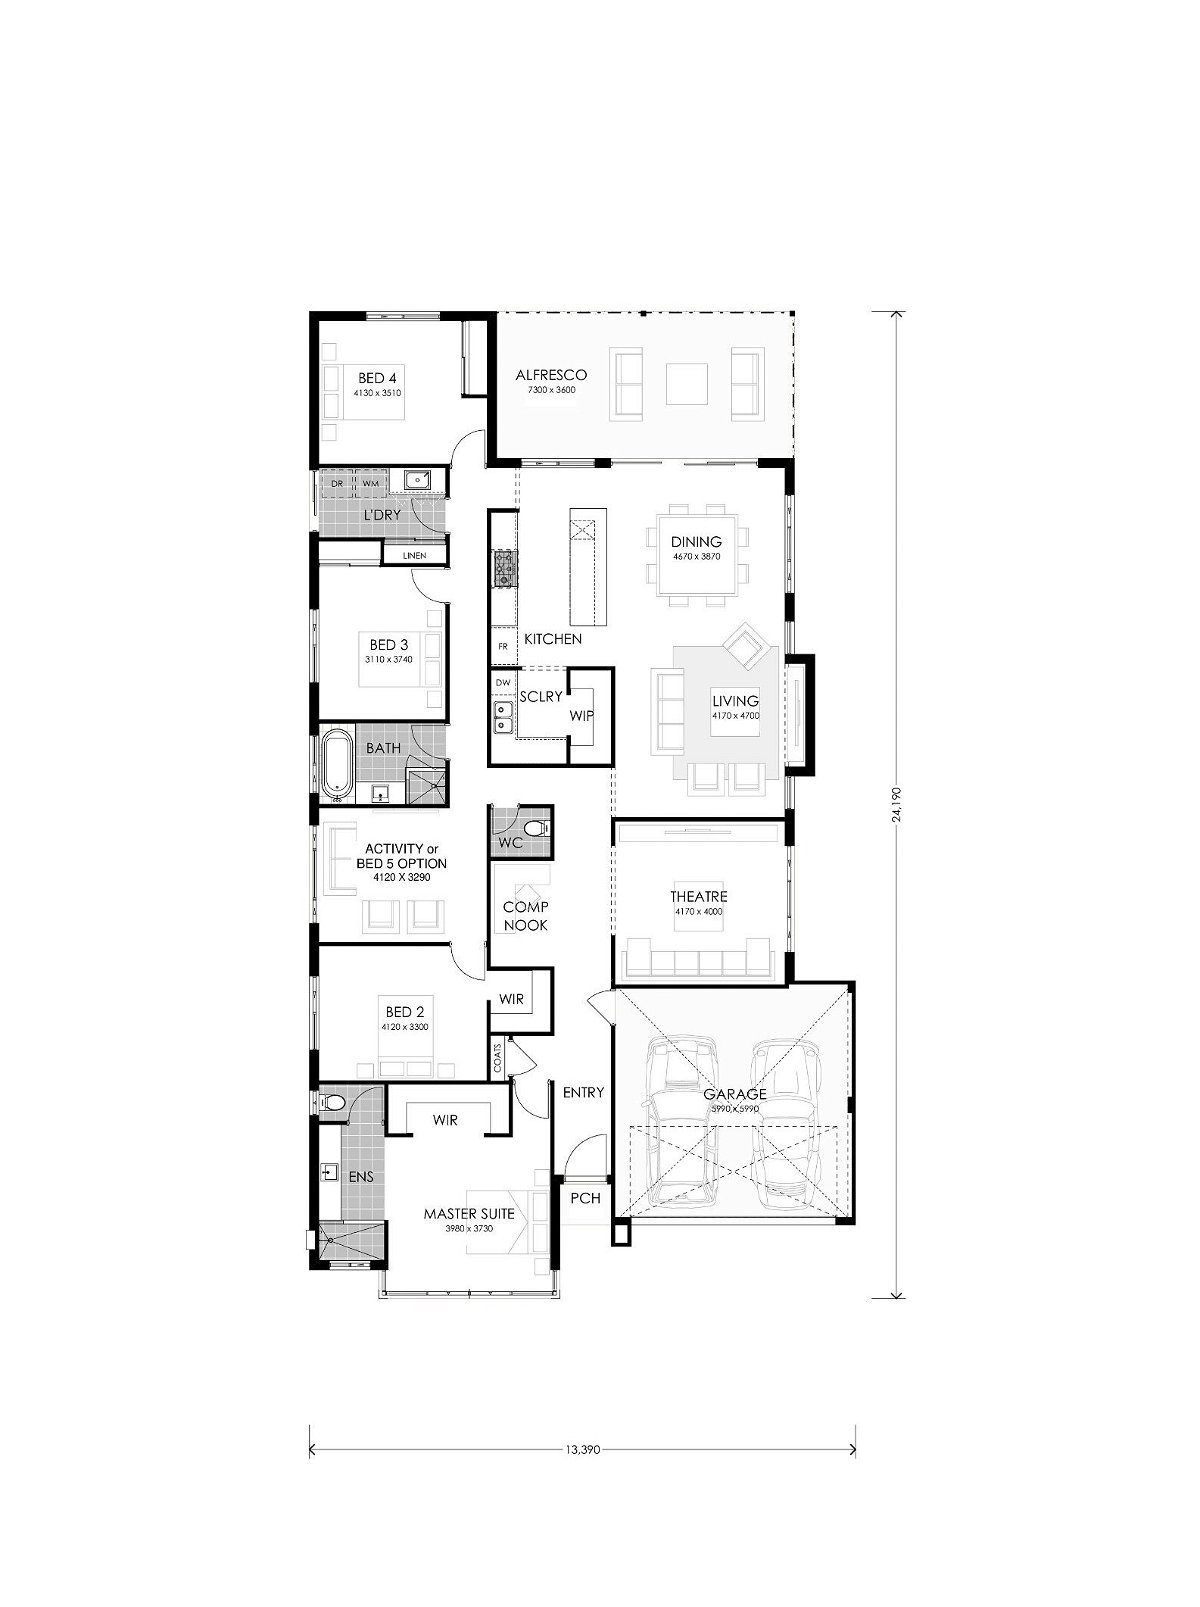 Residential Attitudes - Social Butterfly | 5 Bed - Floorplan - Social Butterfly Brochure Plan